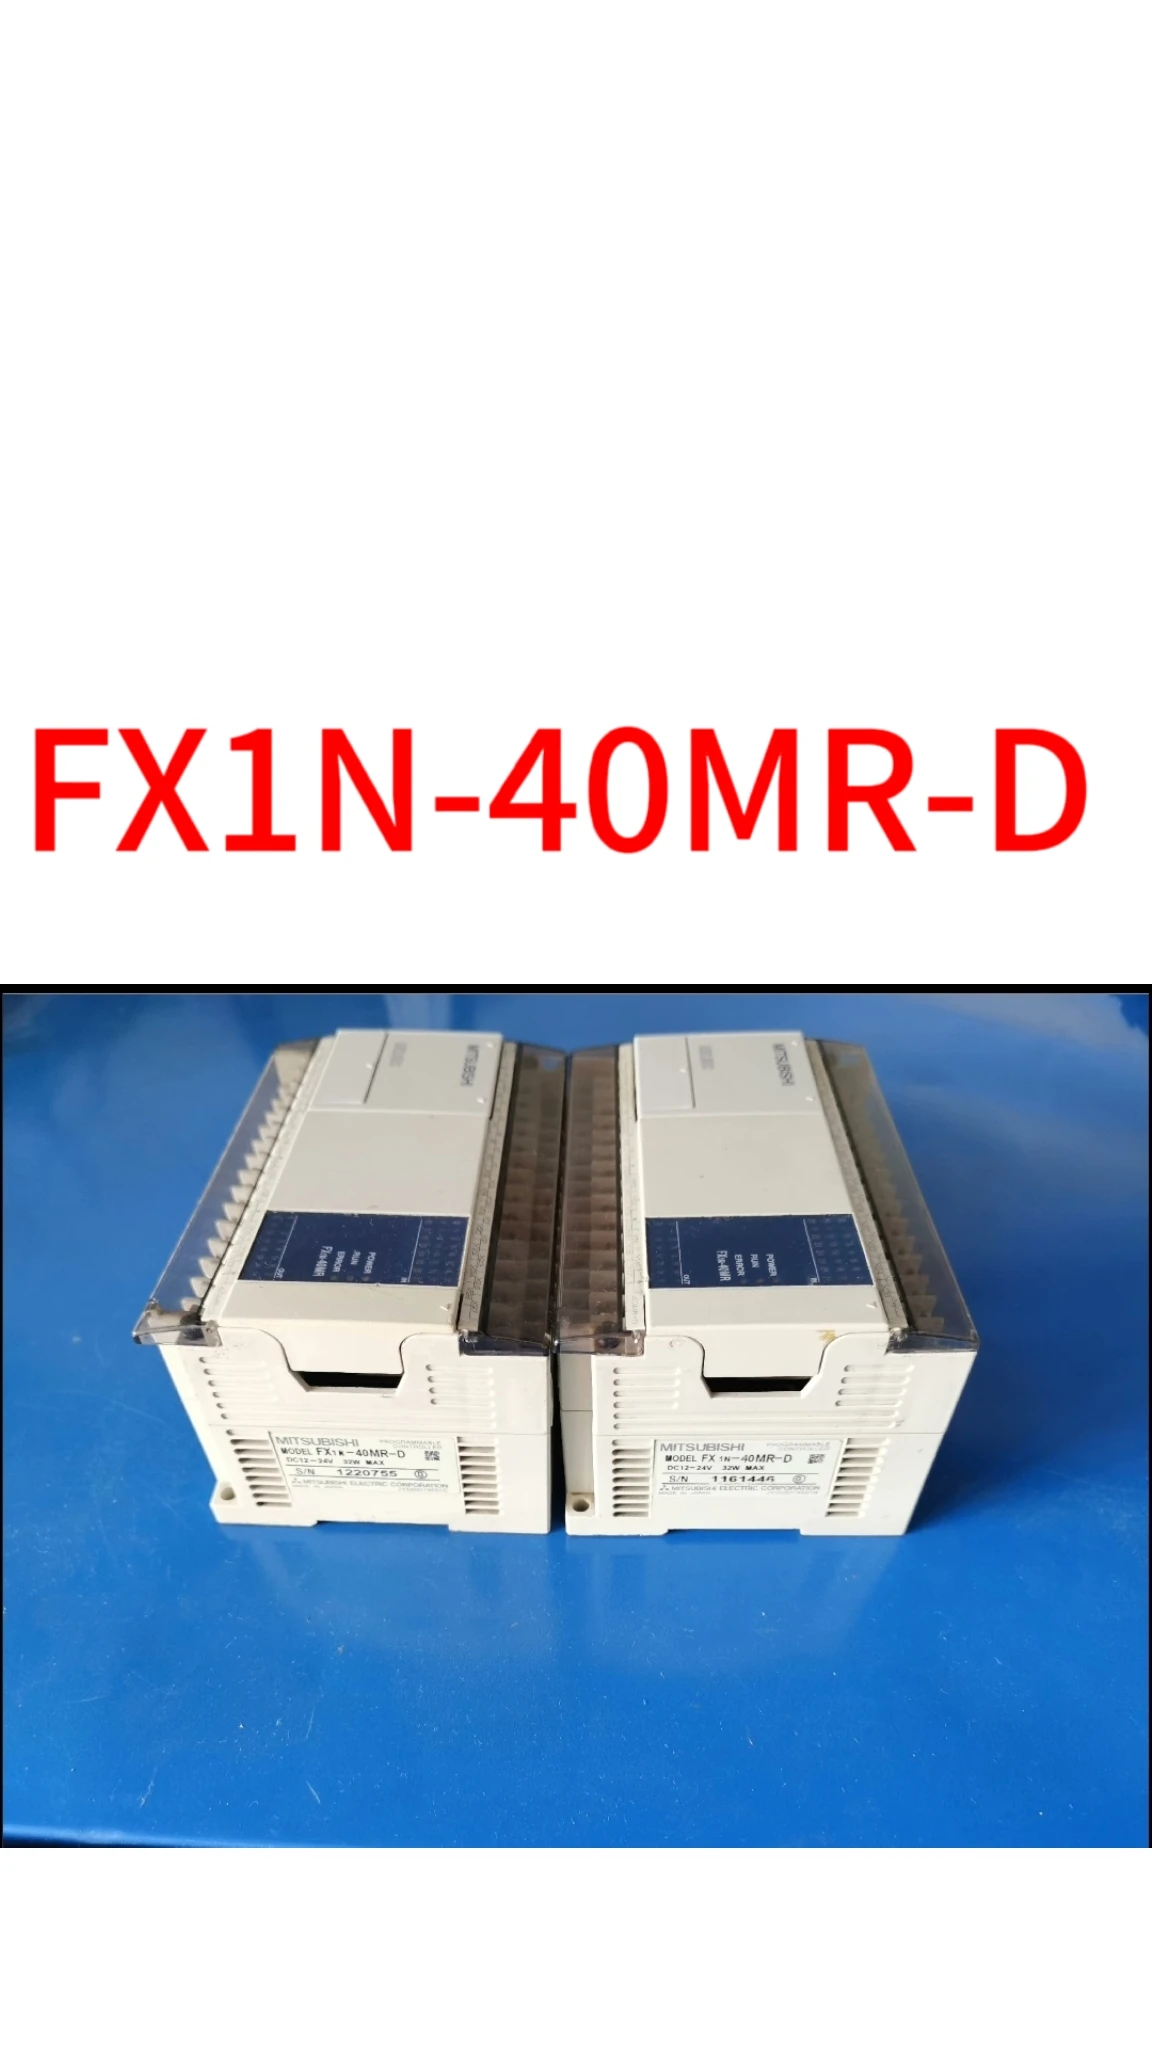 

Second-hand FX1N-40MR-D test OK